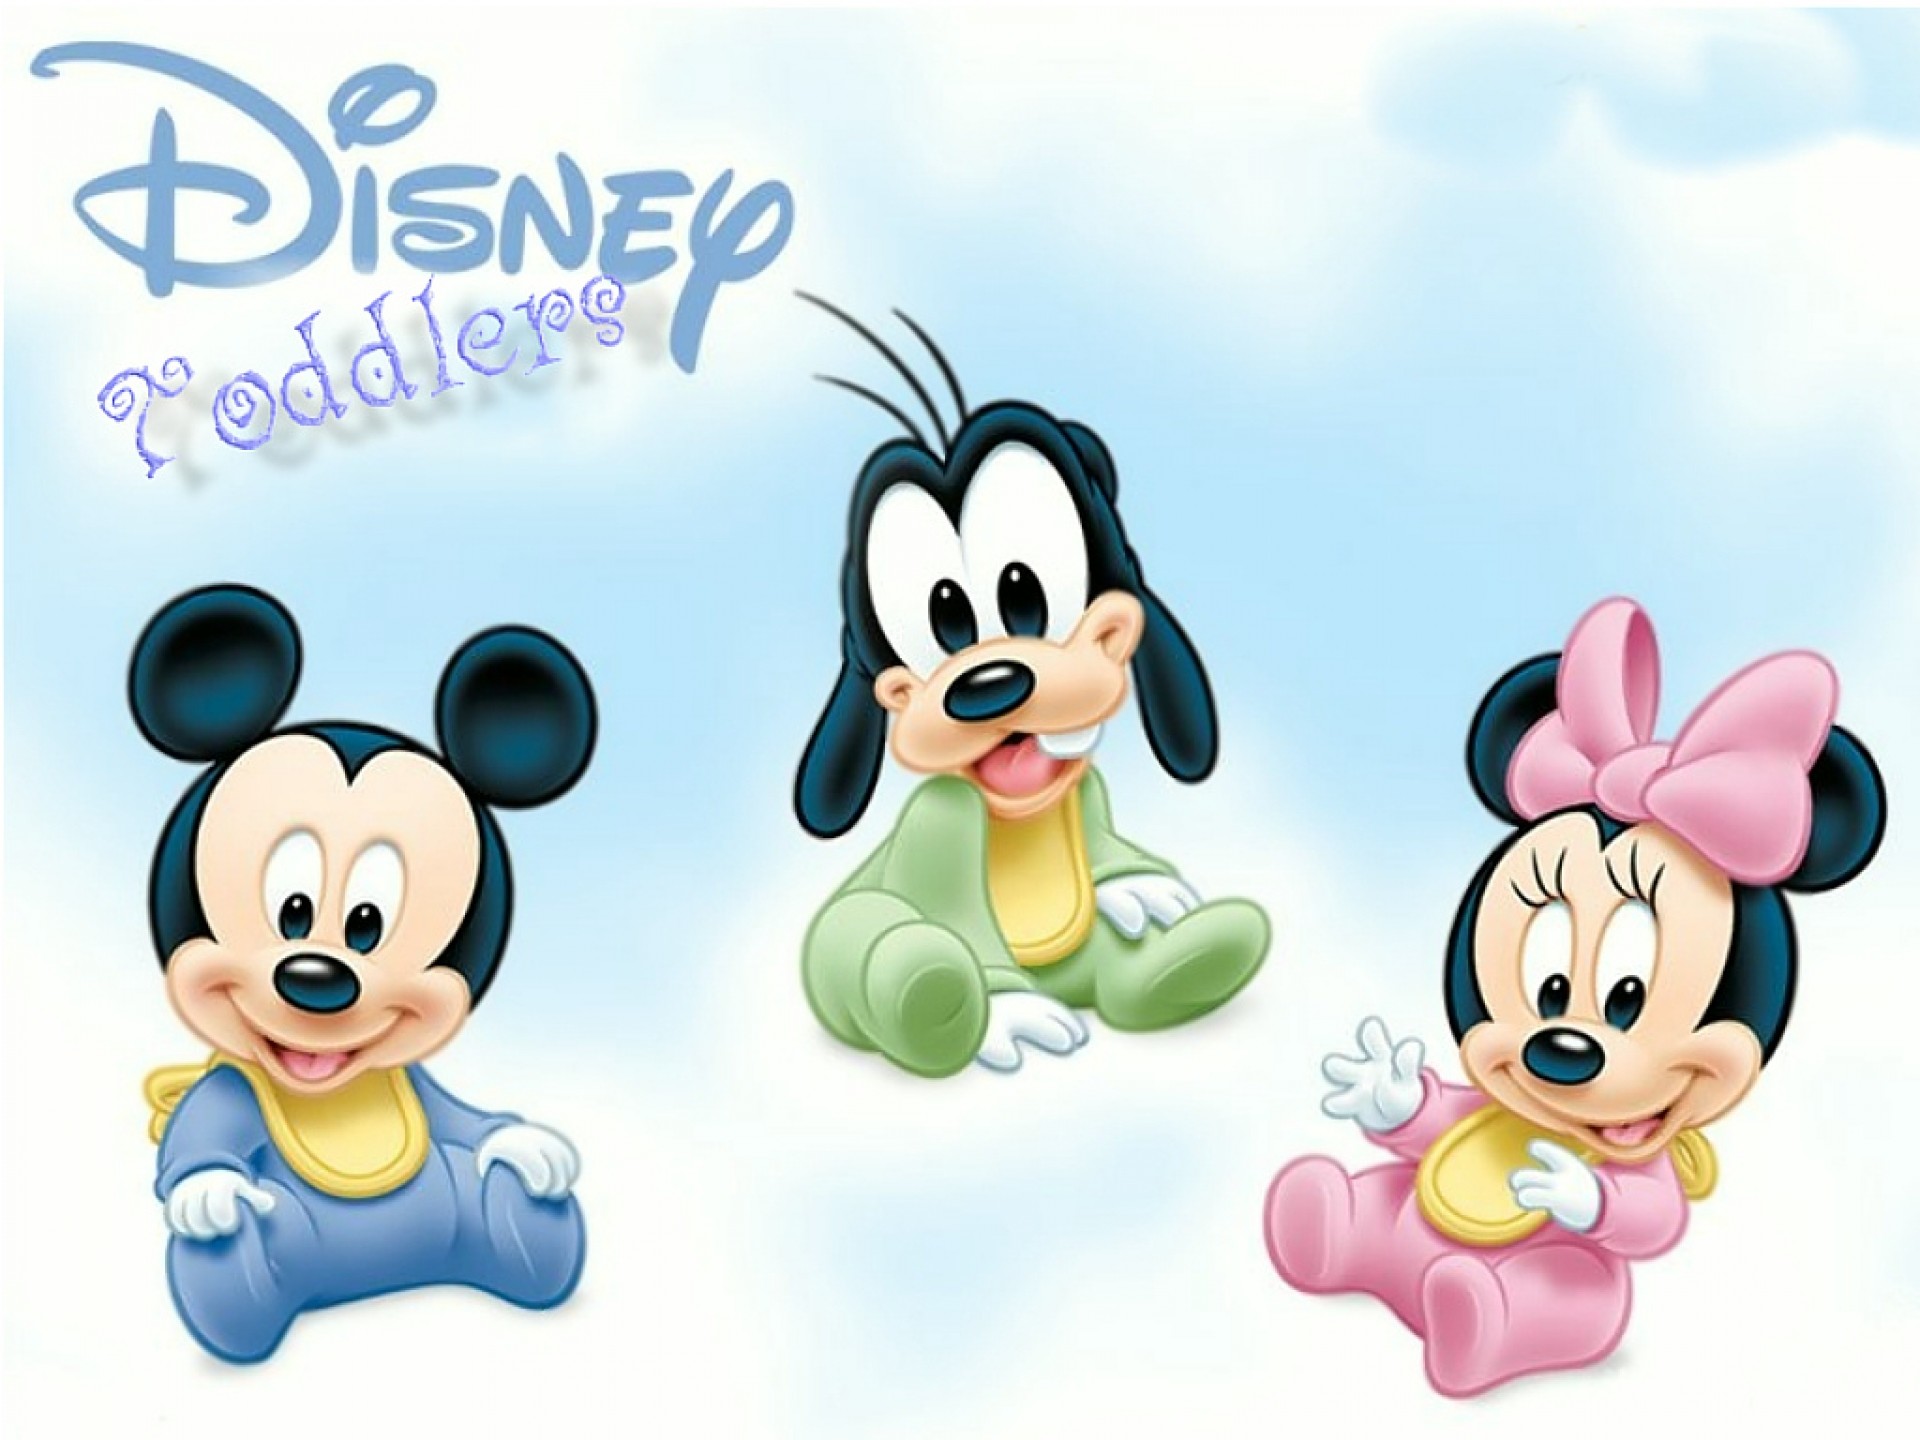 1920x1440 Disney Cartoon Characters HD Wallpapers